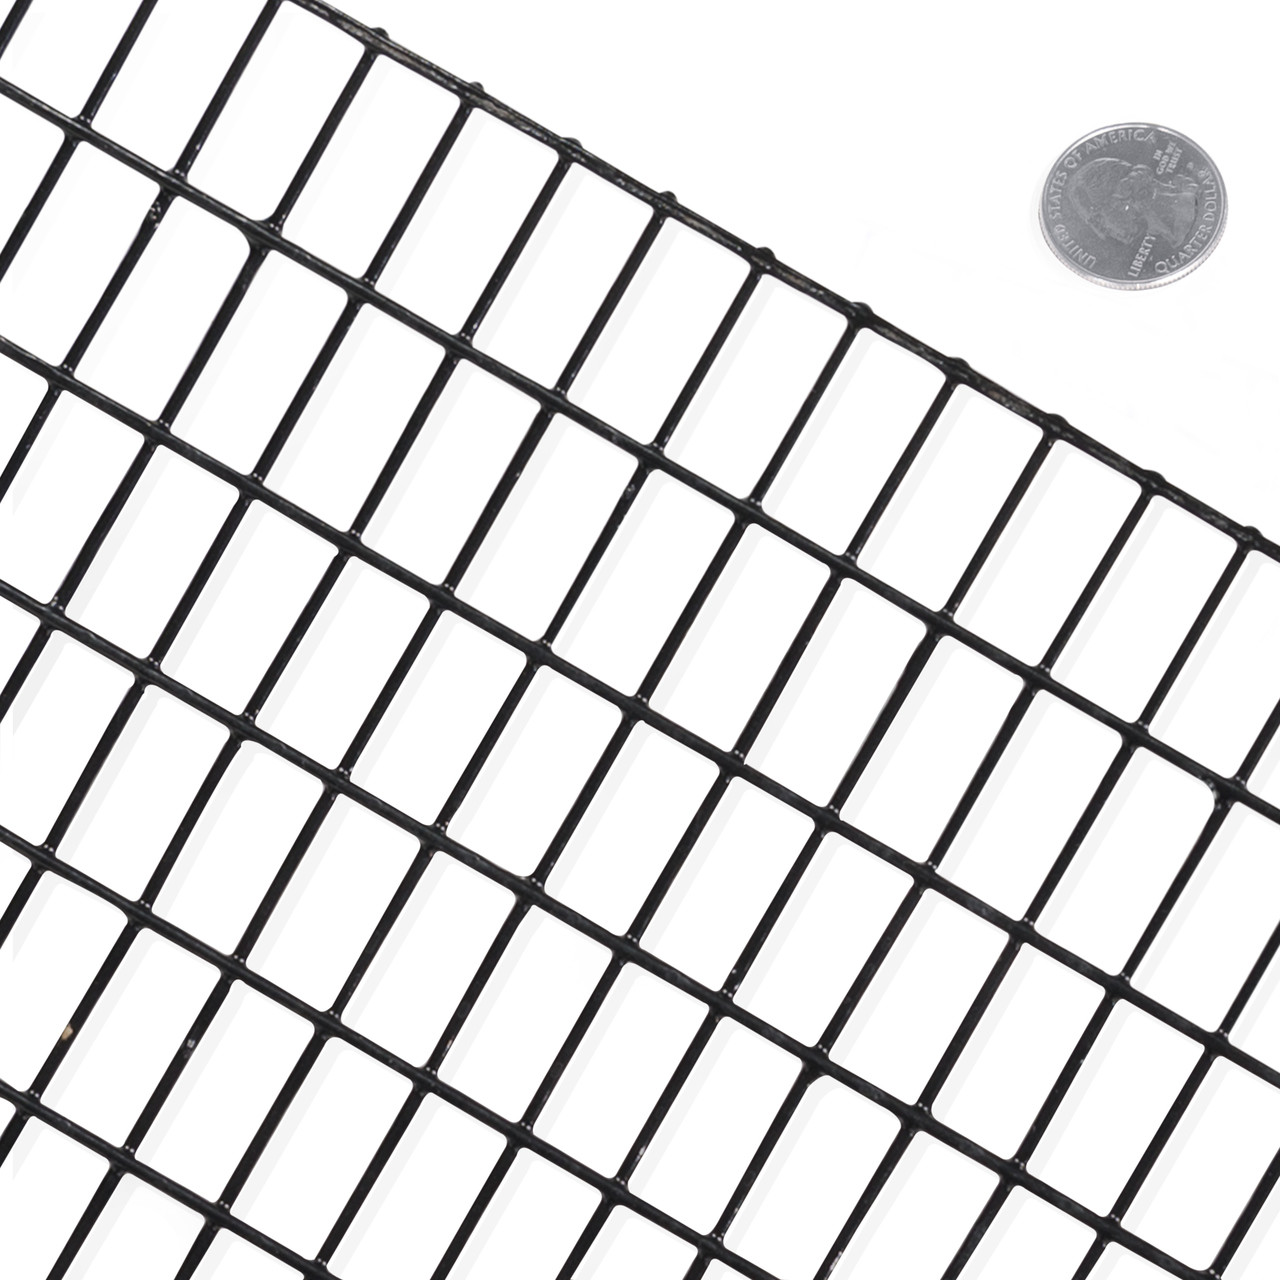 10 gauge wire mesh concrete